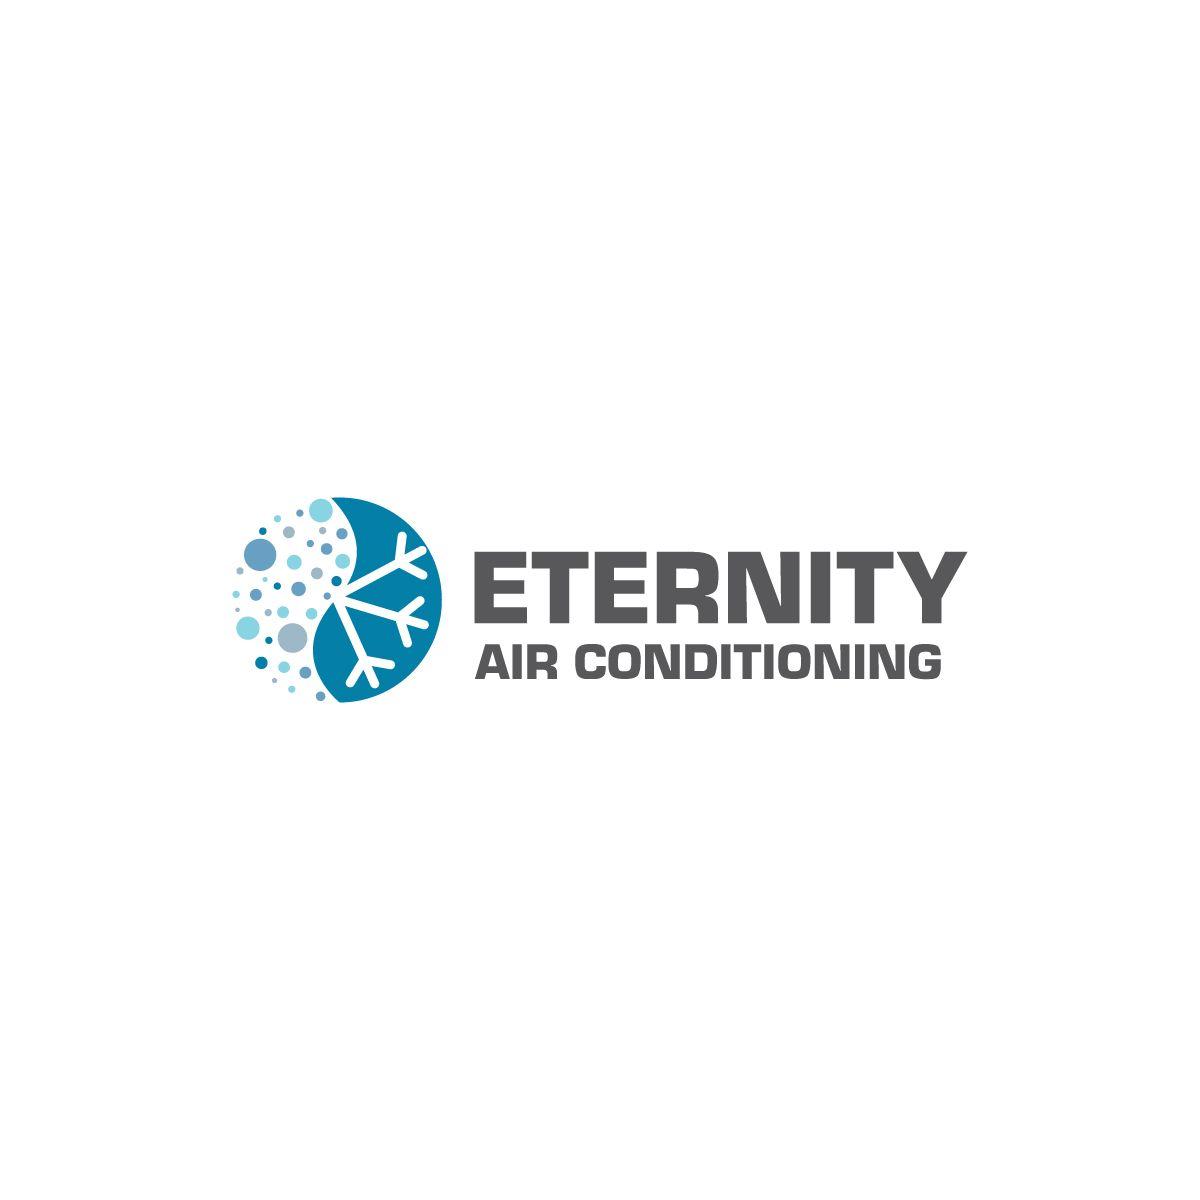 Eternity Circle Logo - Modern, Professional, Air Conditioning Logo Design for ETERNITY AIR ...